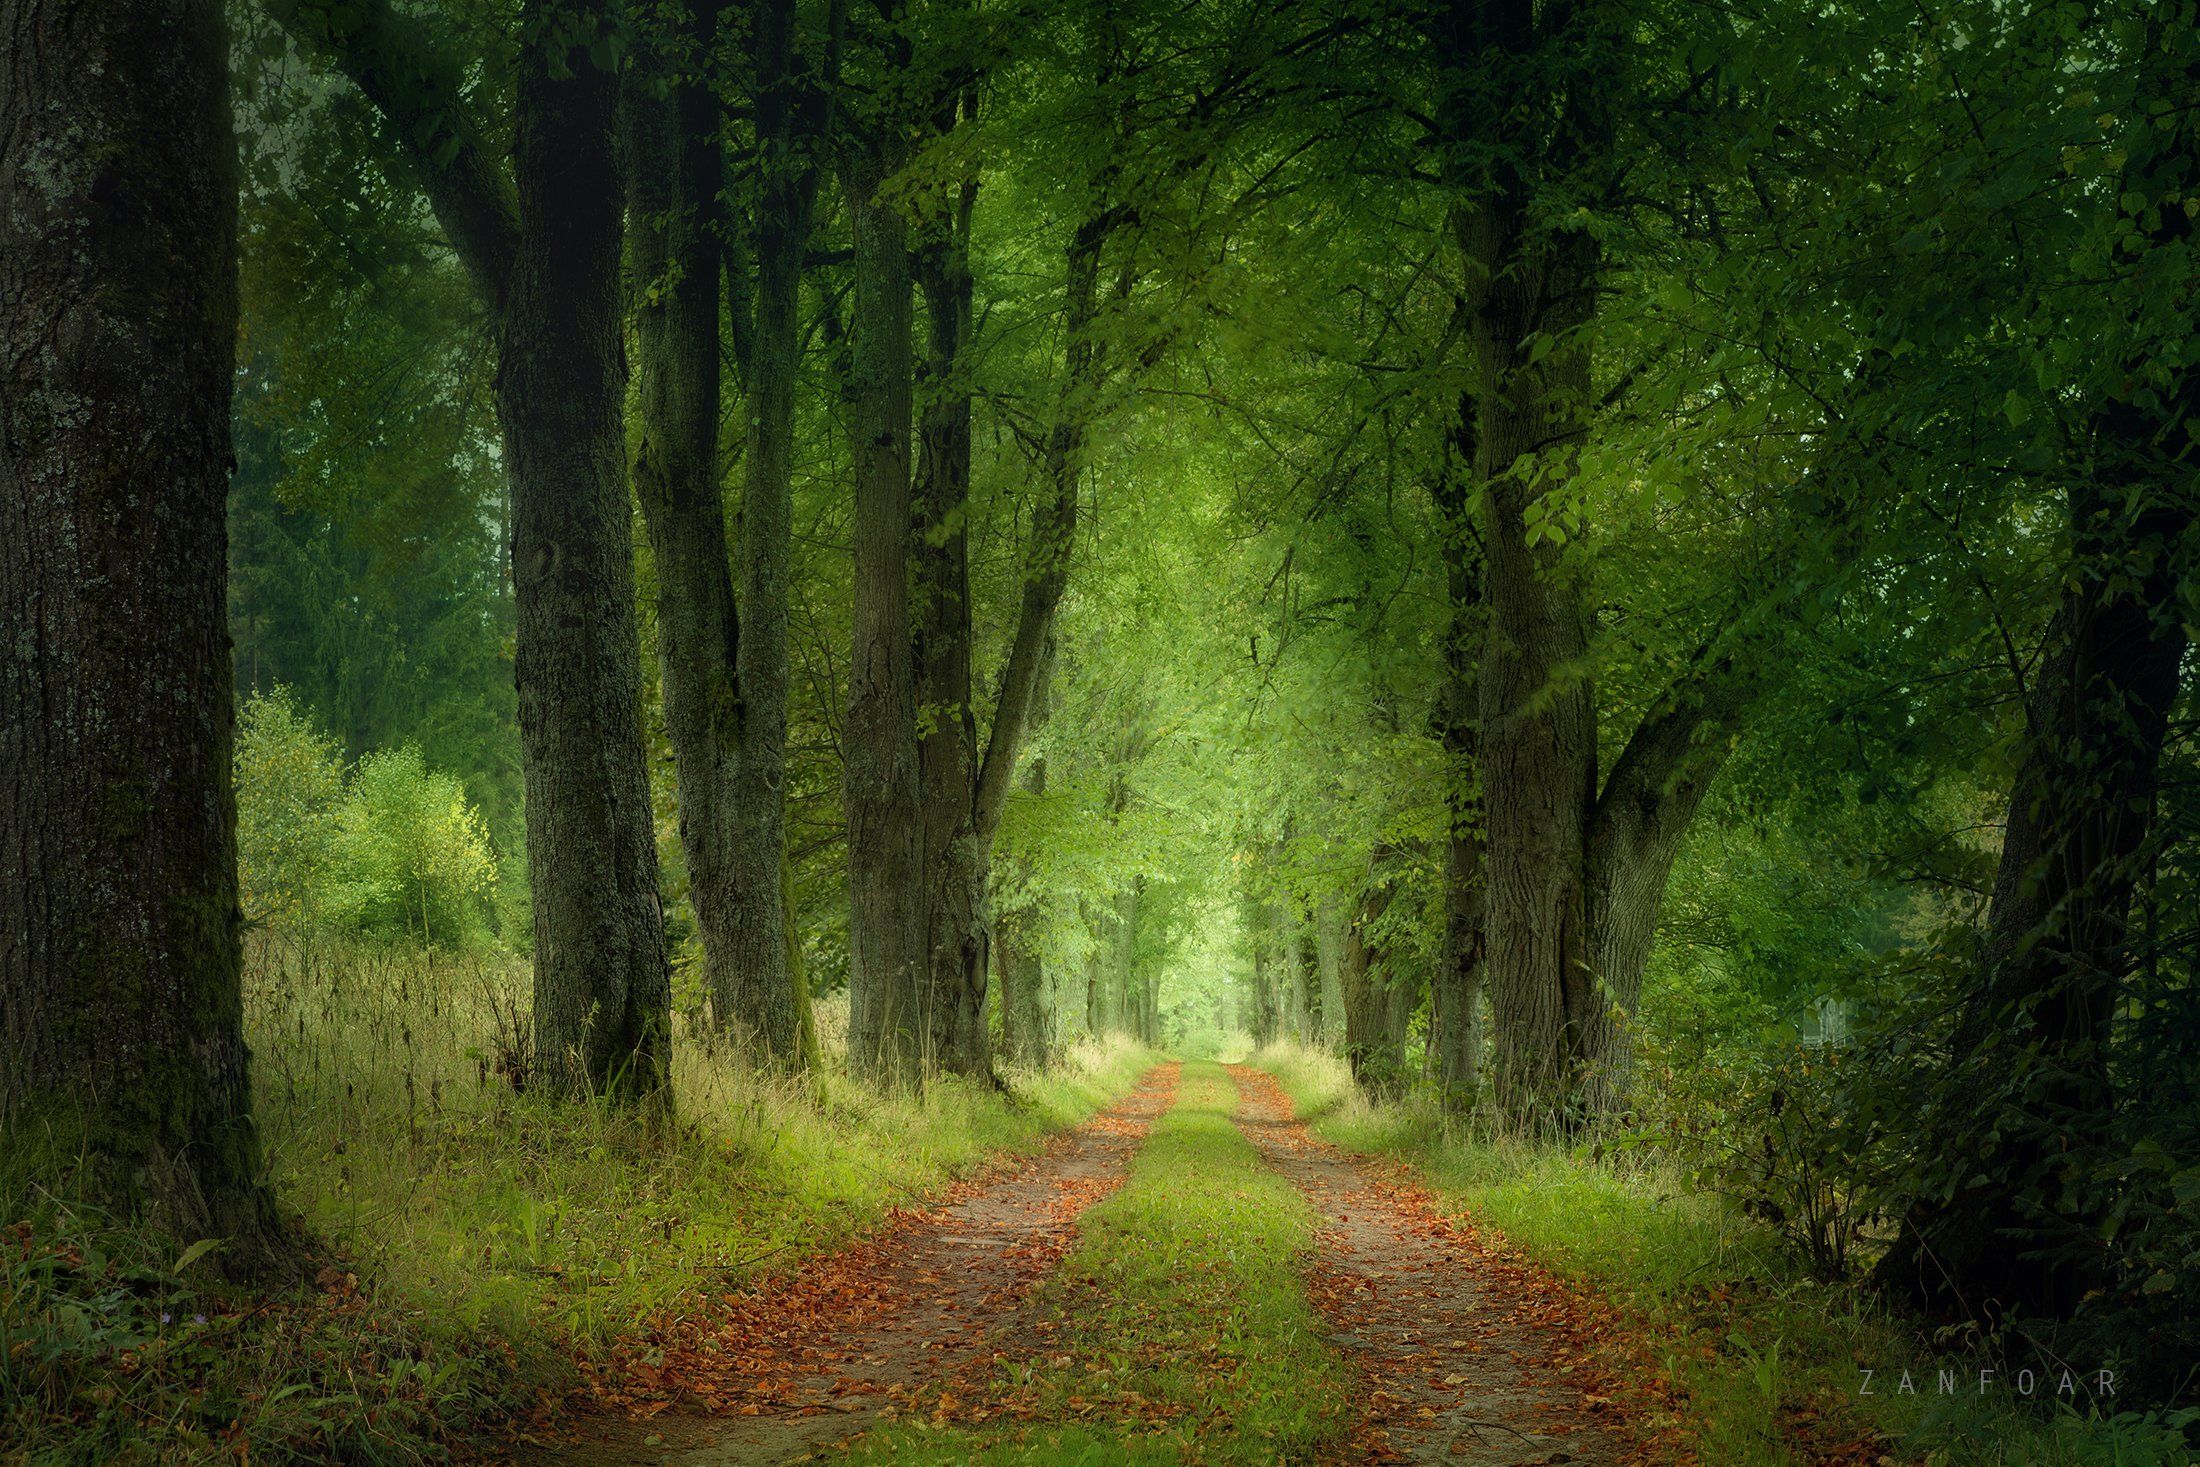 красота лесных дорогa,красота, лес,дорогa,аллея, деревья, листья, осень ,чехия,zanfoar,czech republic,nikon d750,природа, Zanfoar